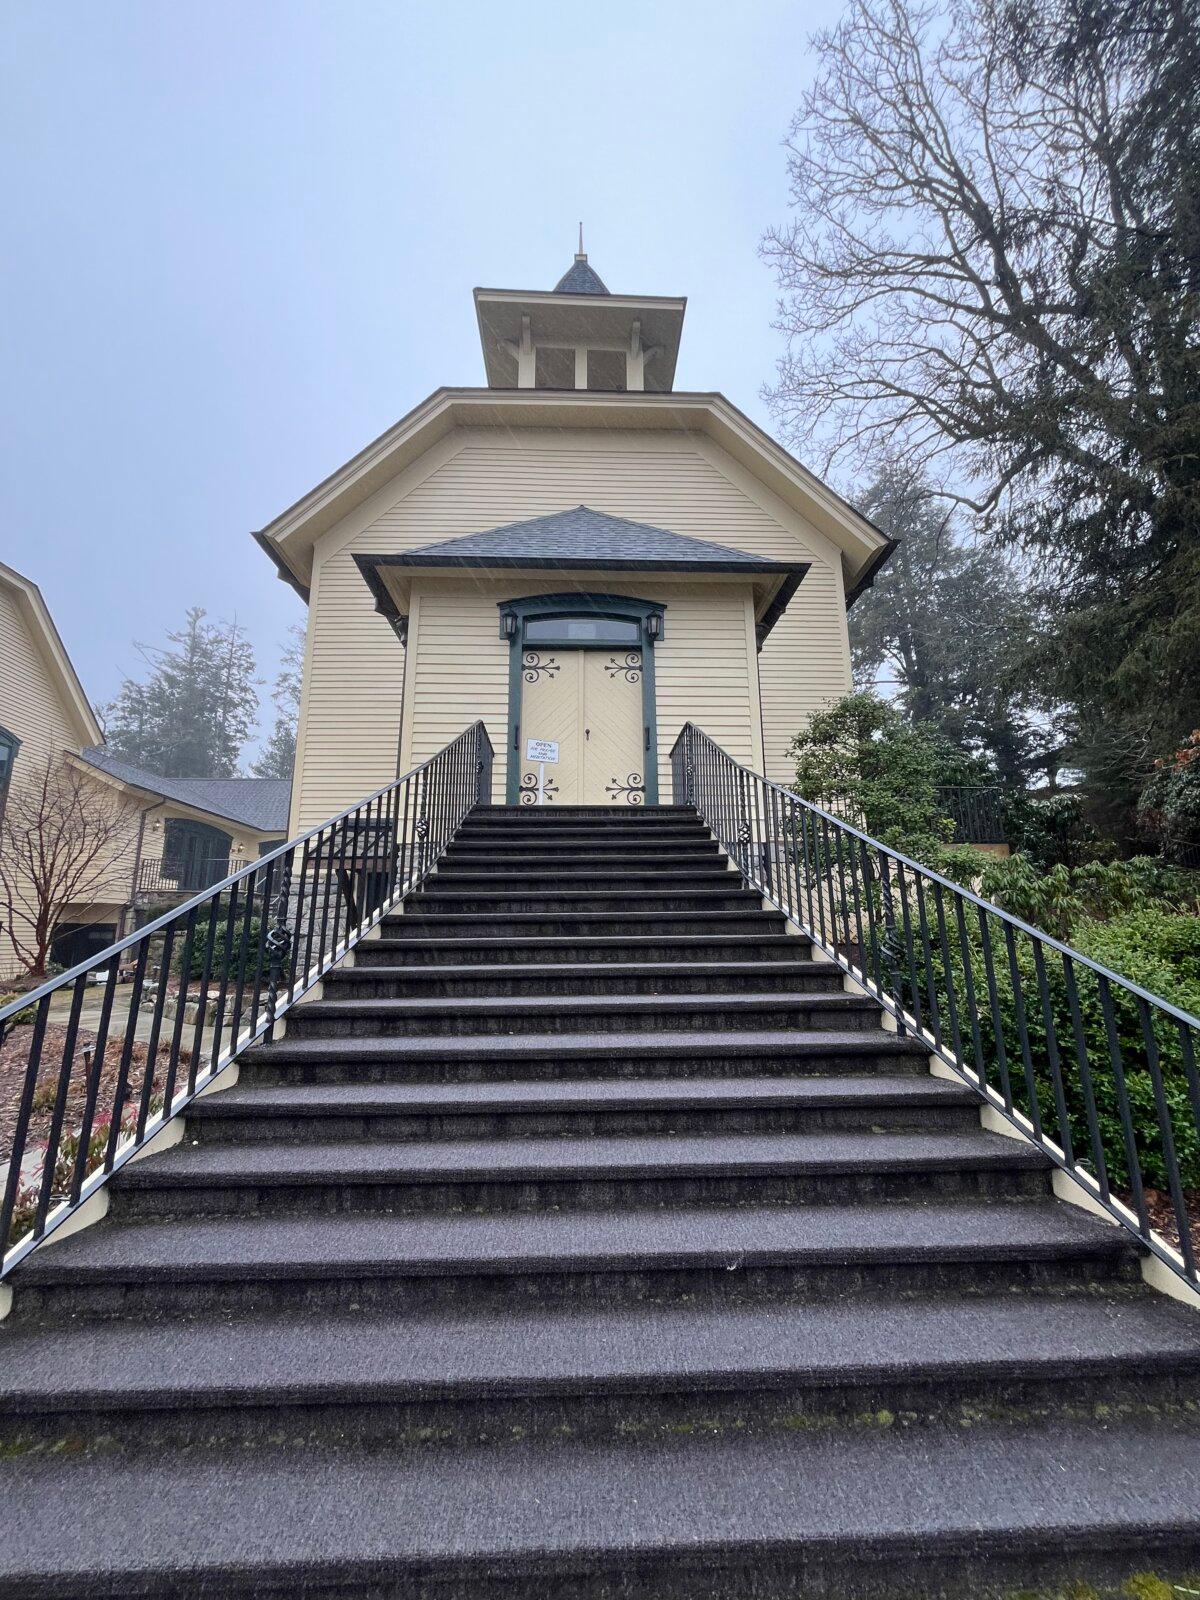 An exterior view of First Presbyterian Church of Highlands, N.C. (Courtesy of Deena Bouknight)